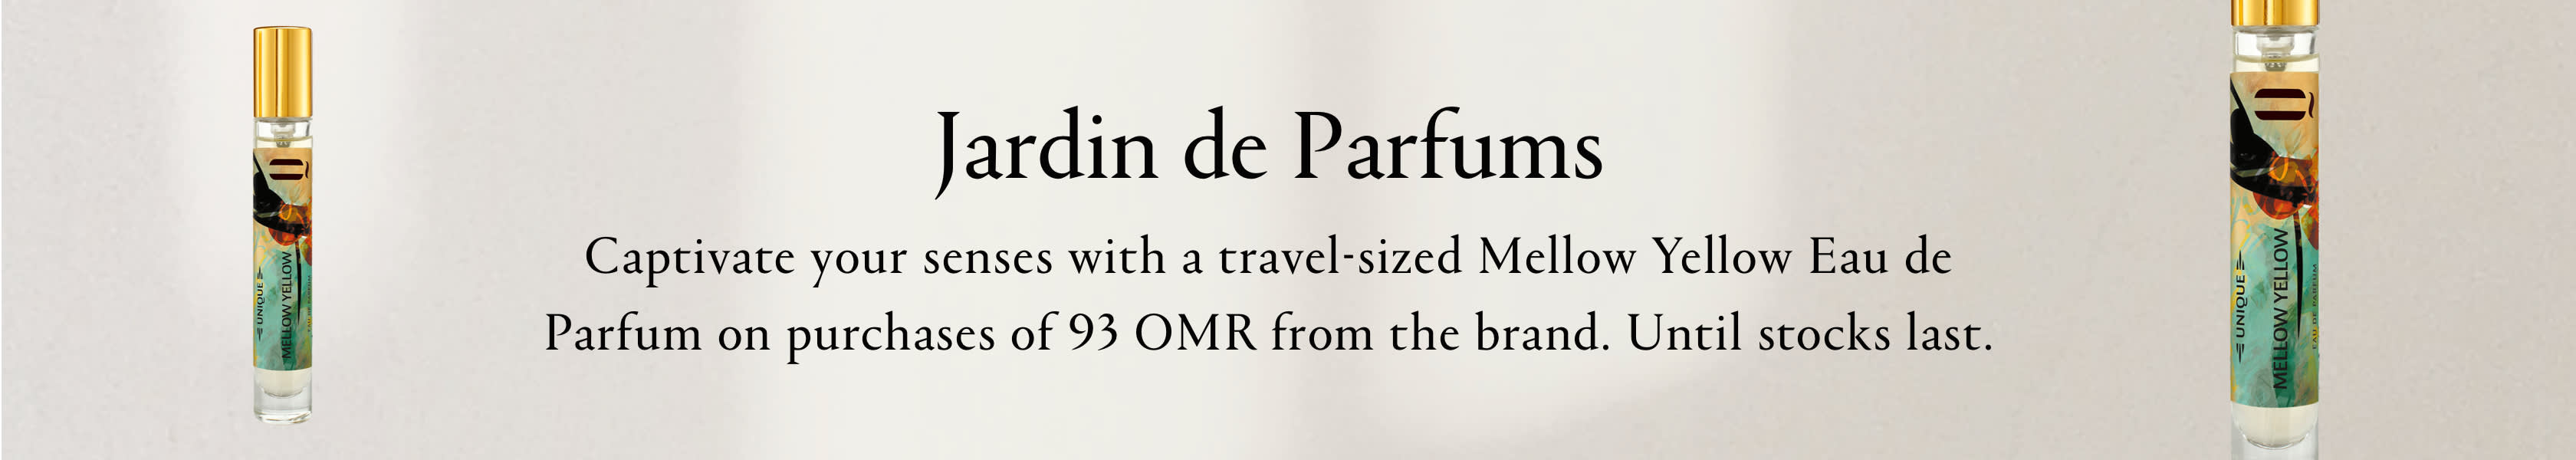 Jardin de Parfums GWP PDP+PLP Web EN OMR WK9